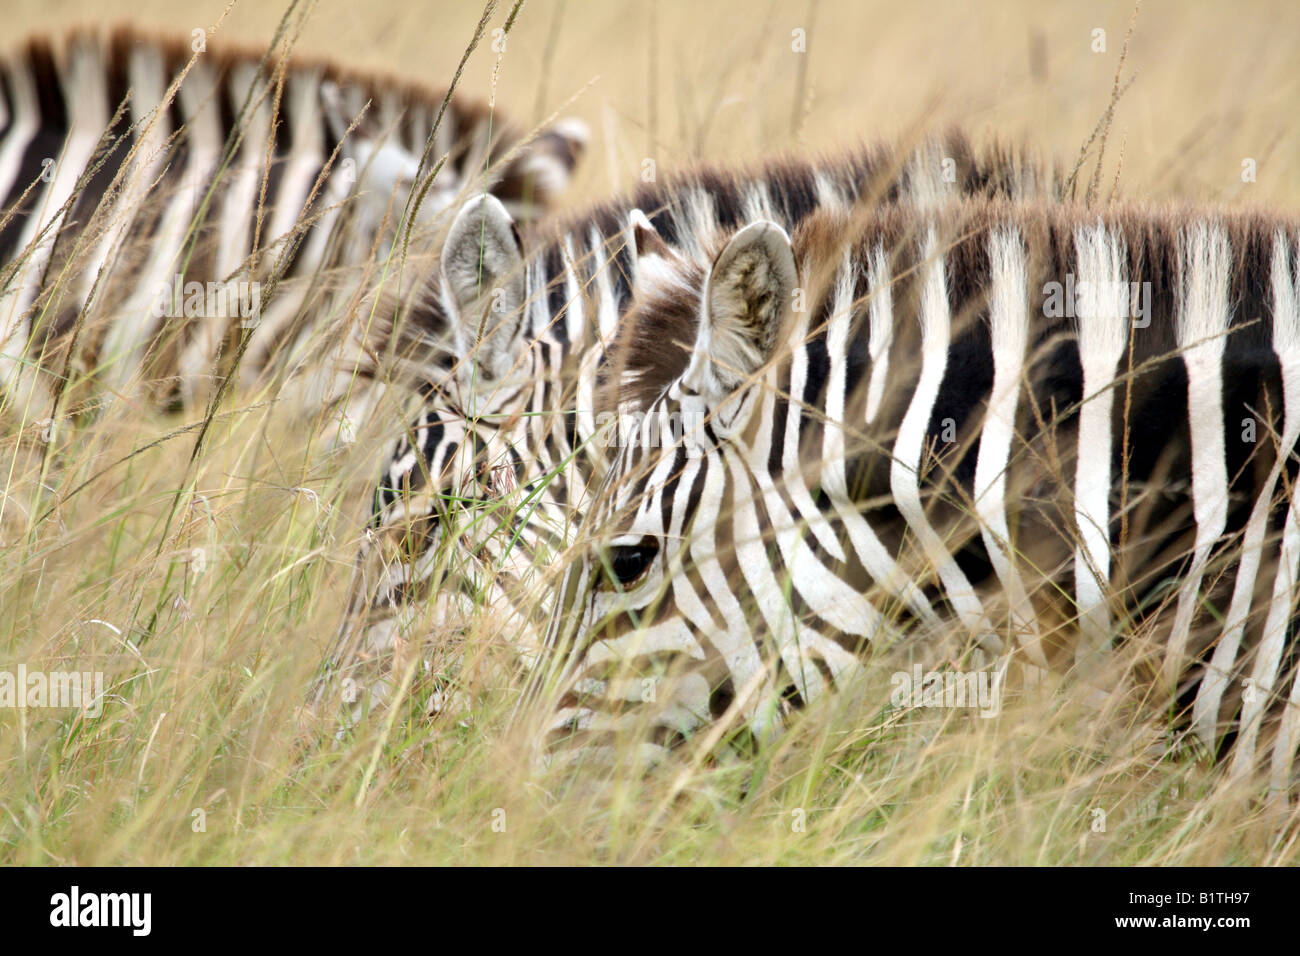 Zebras in the Grass Stock Photo